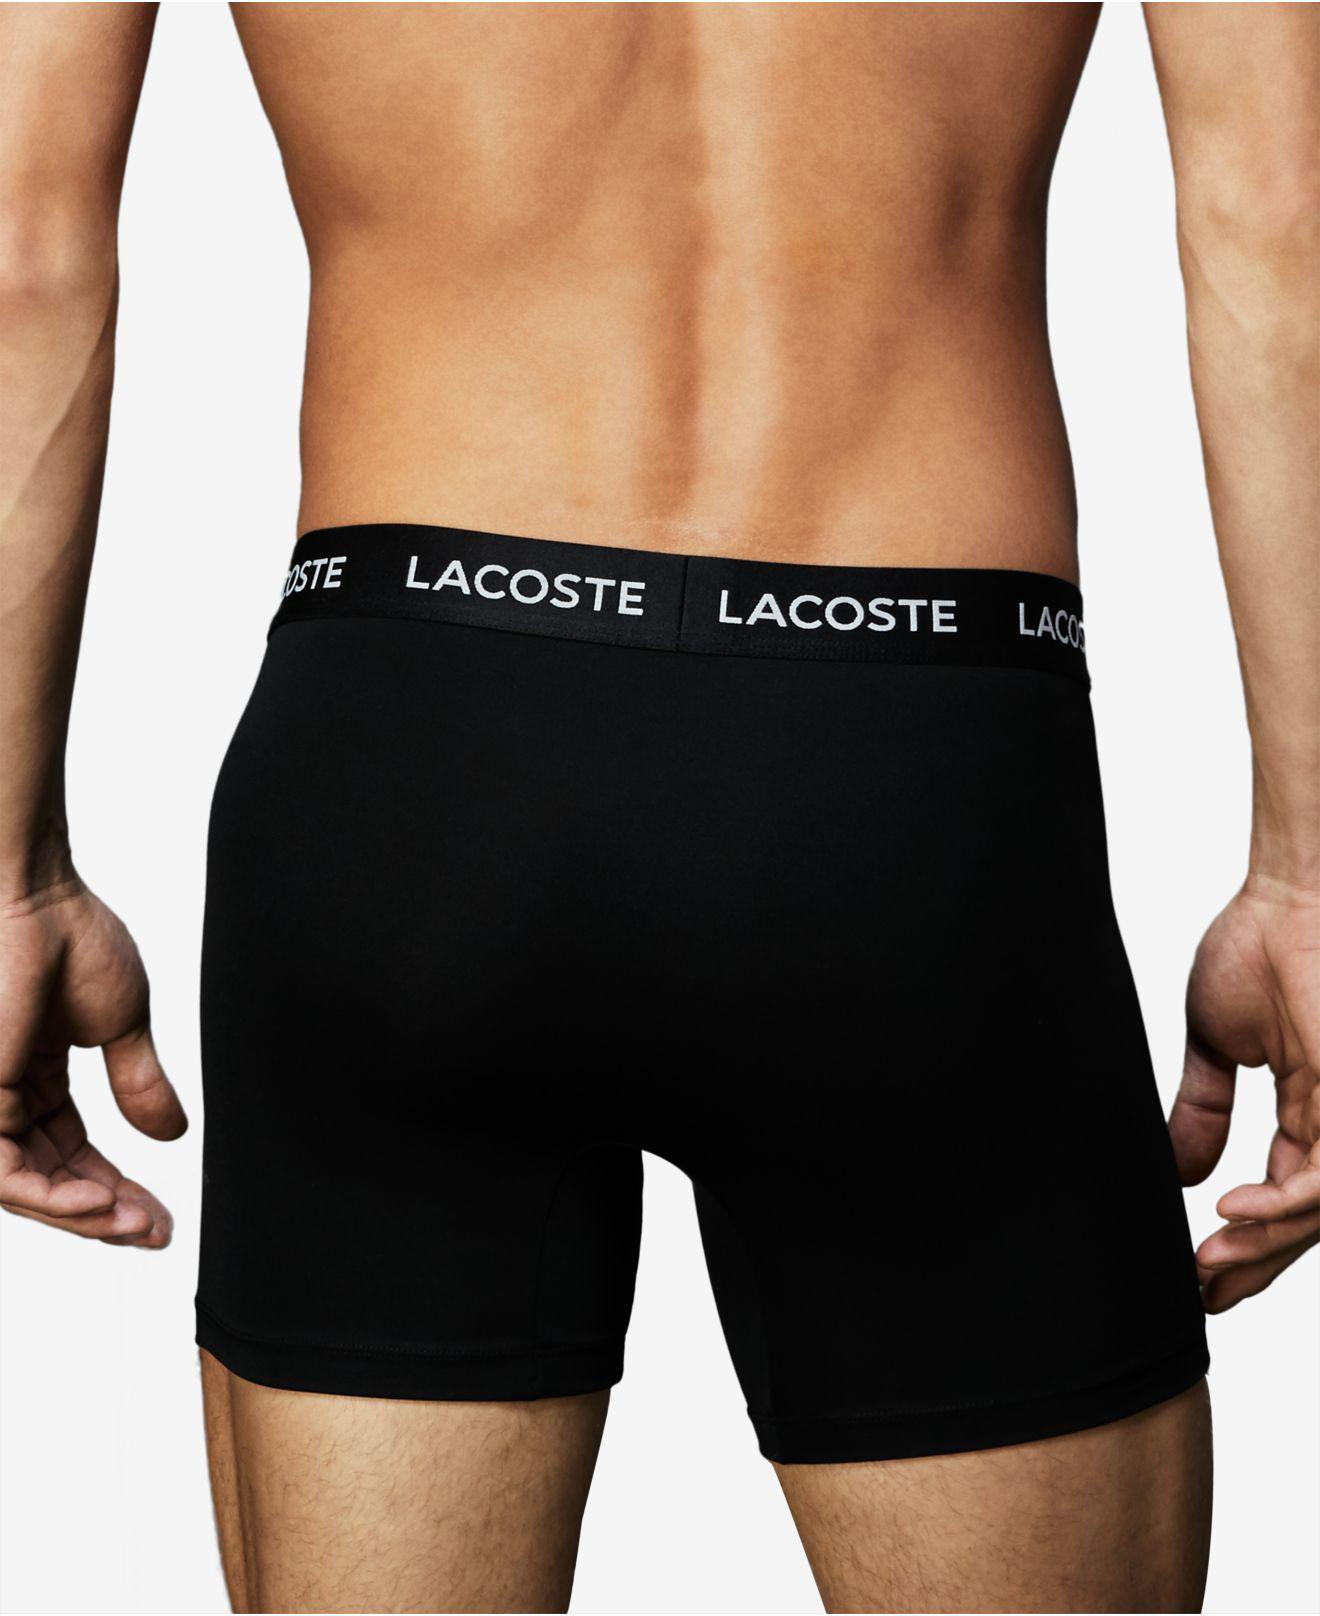 lacoste boxers